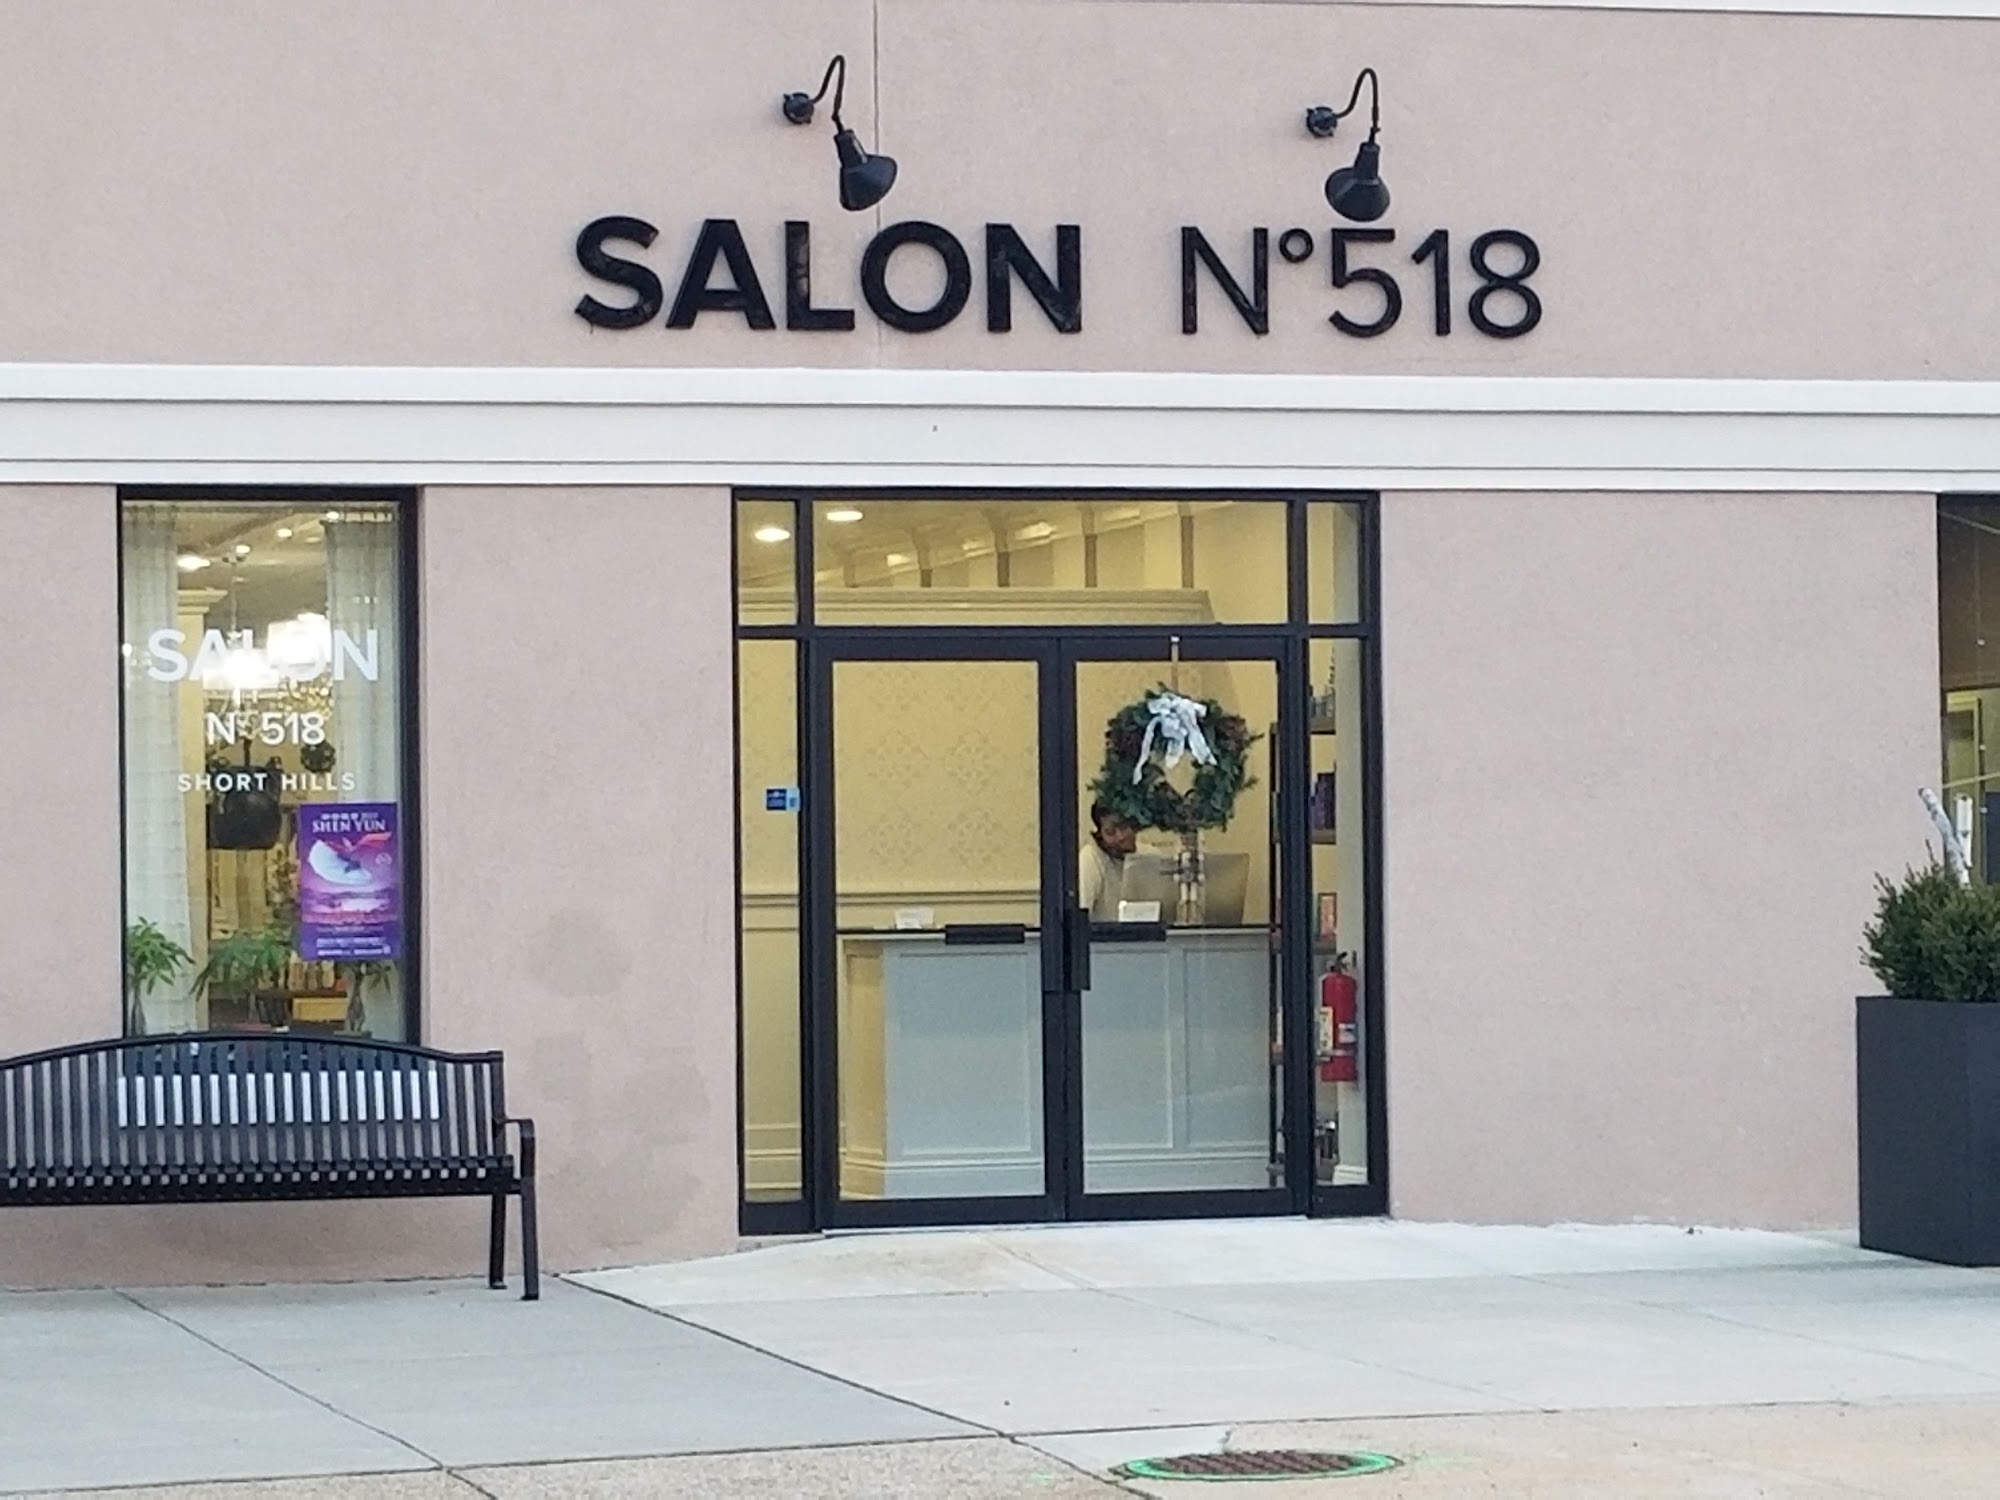 Salon 518 518 Millburn Ave, Short Hills New Jersey 07078